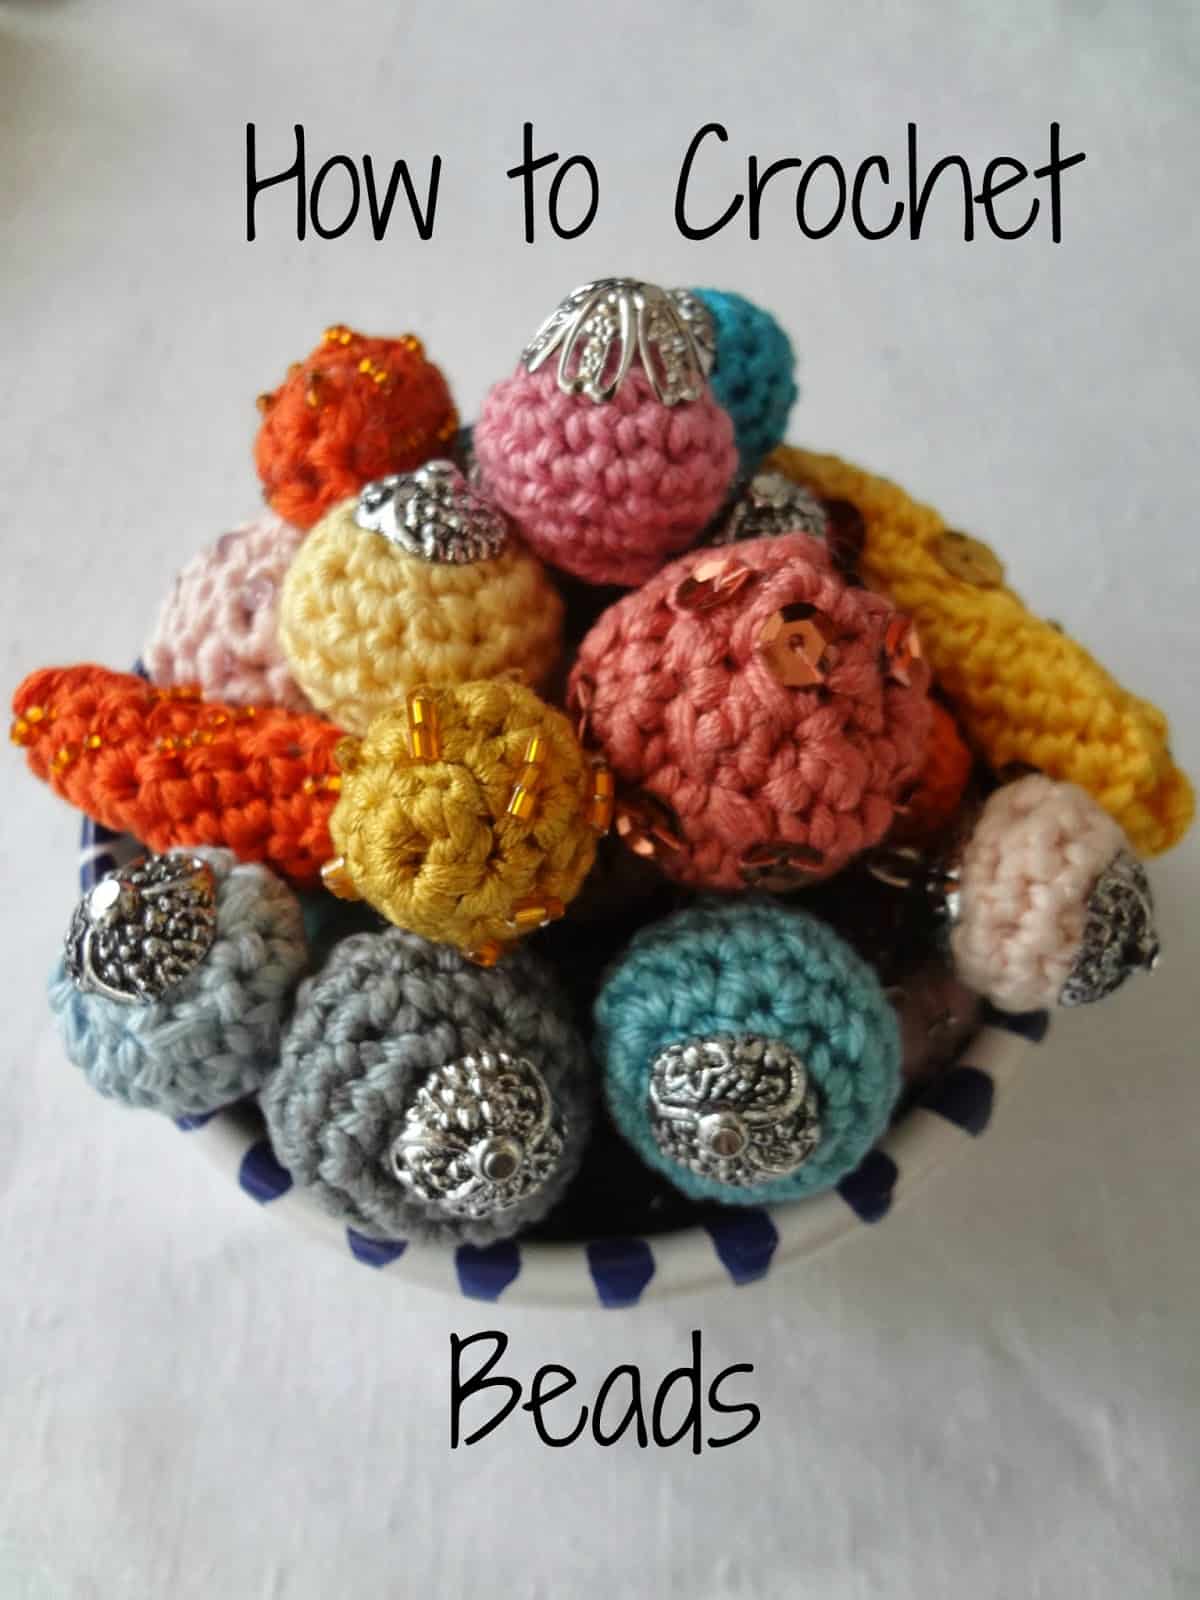 Crocheted beads